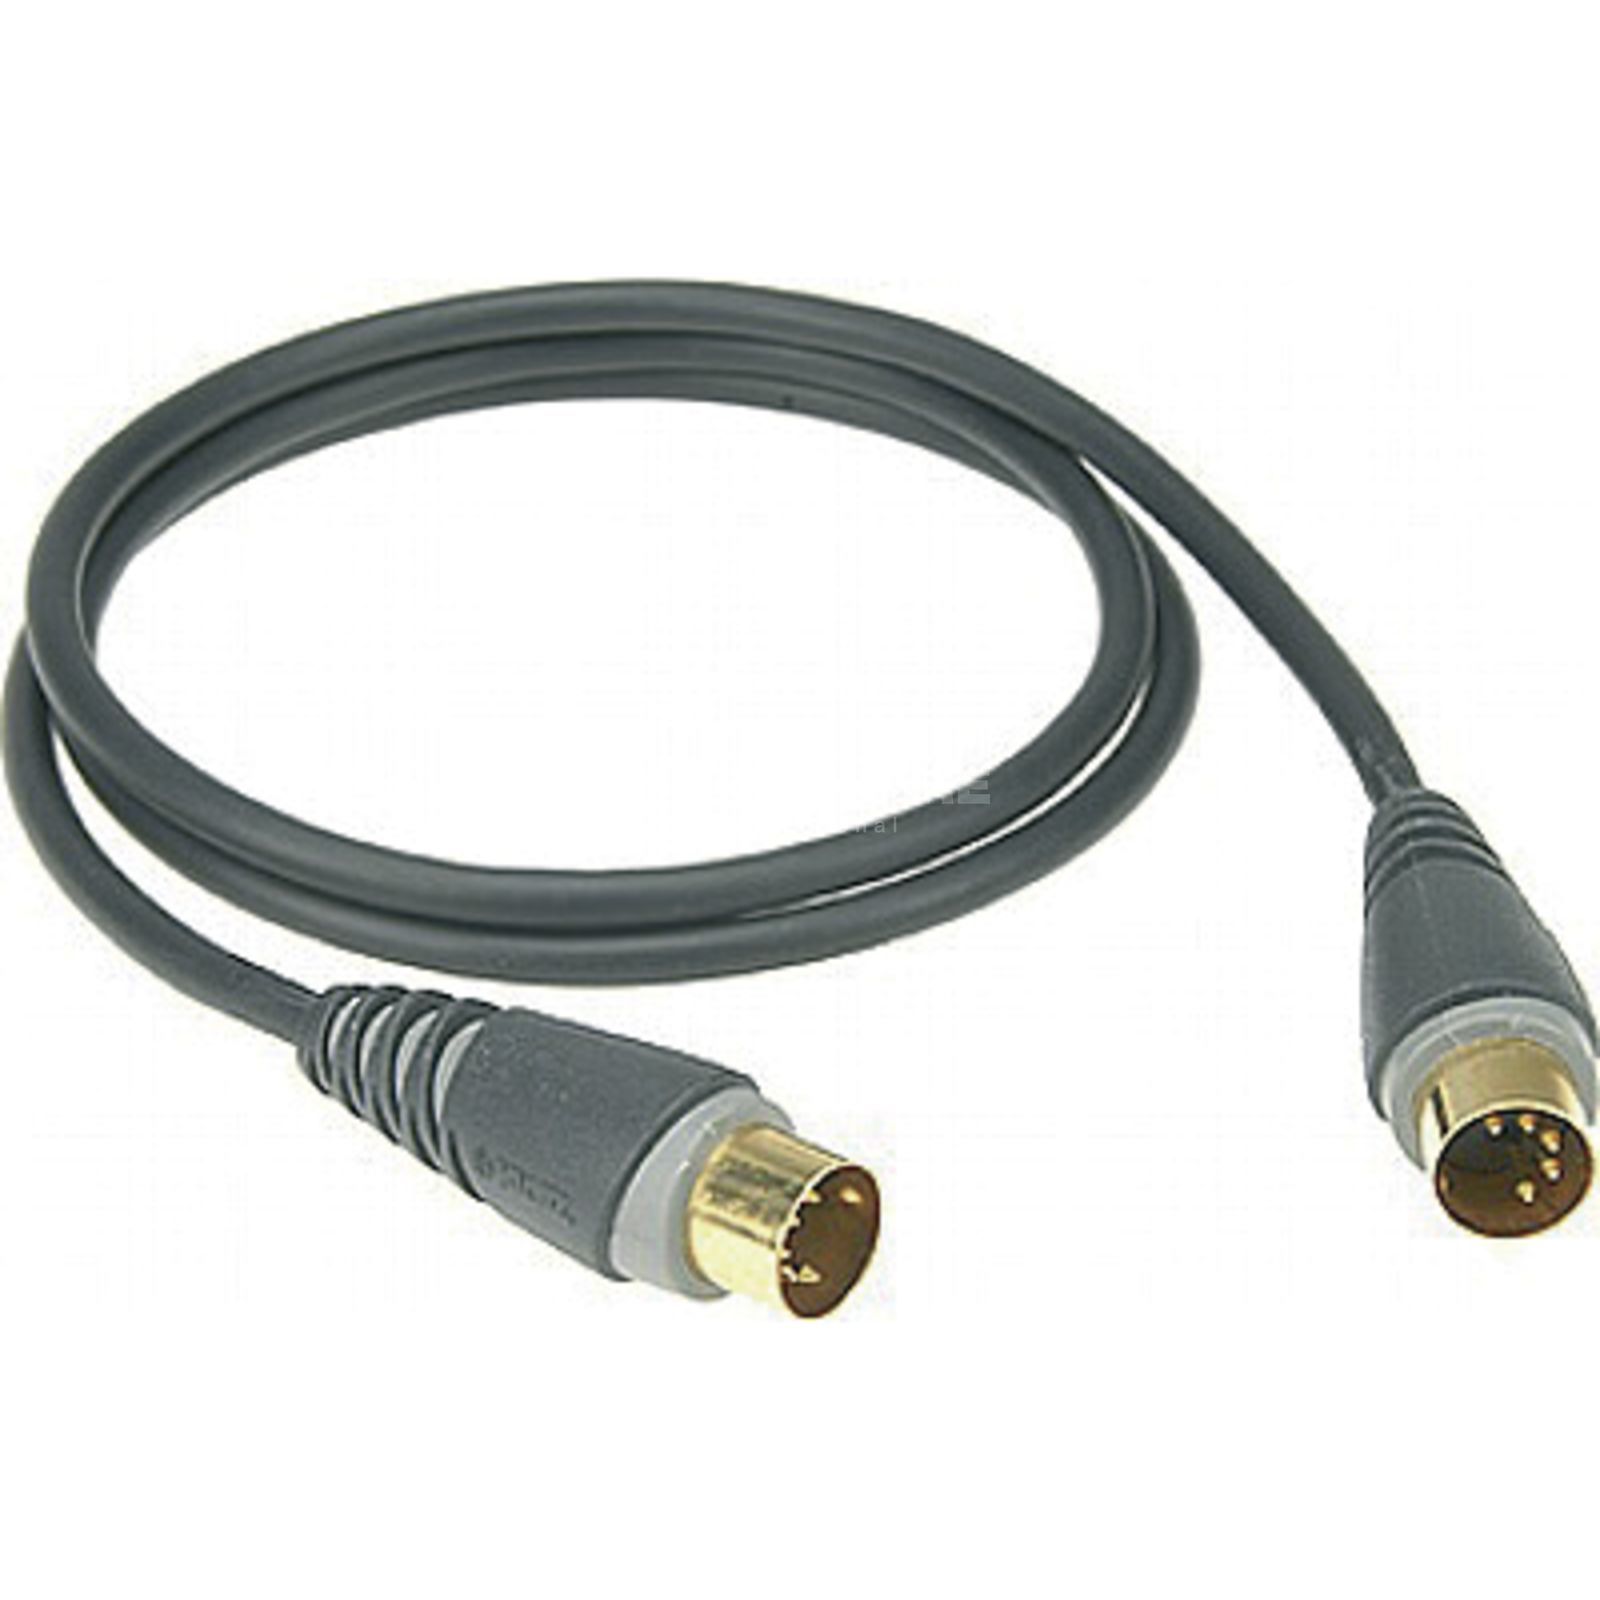 Klotz Midi Cable 1m DIN5 DIN5